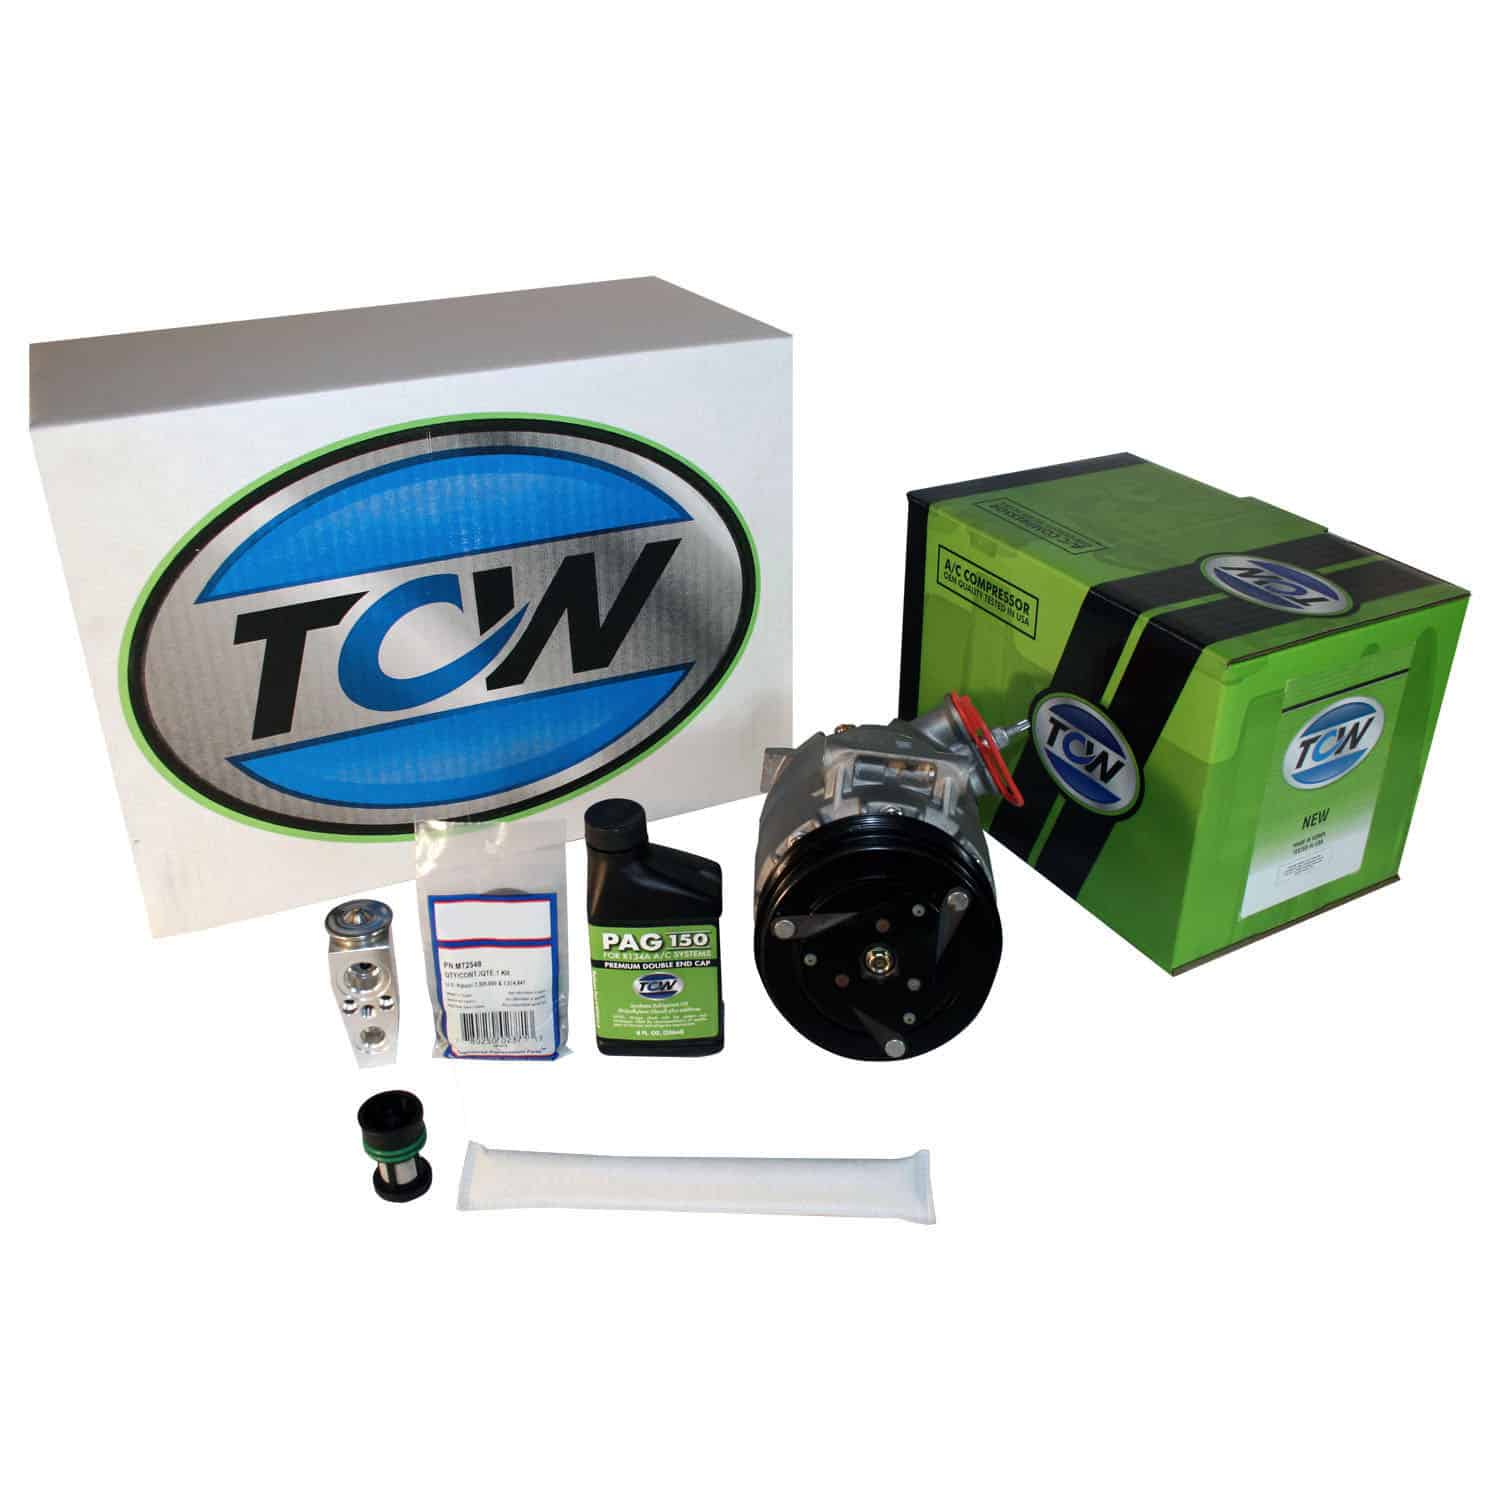 TCW Vehicle A/C Kit K1000226N New Product Image field_60b6a13a6e67c